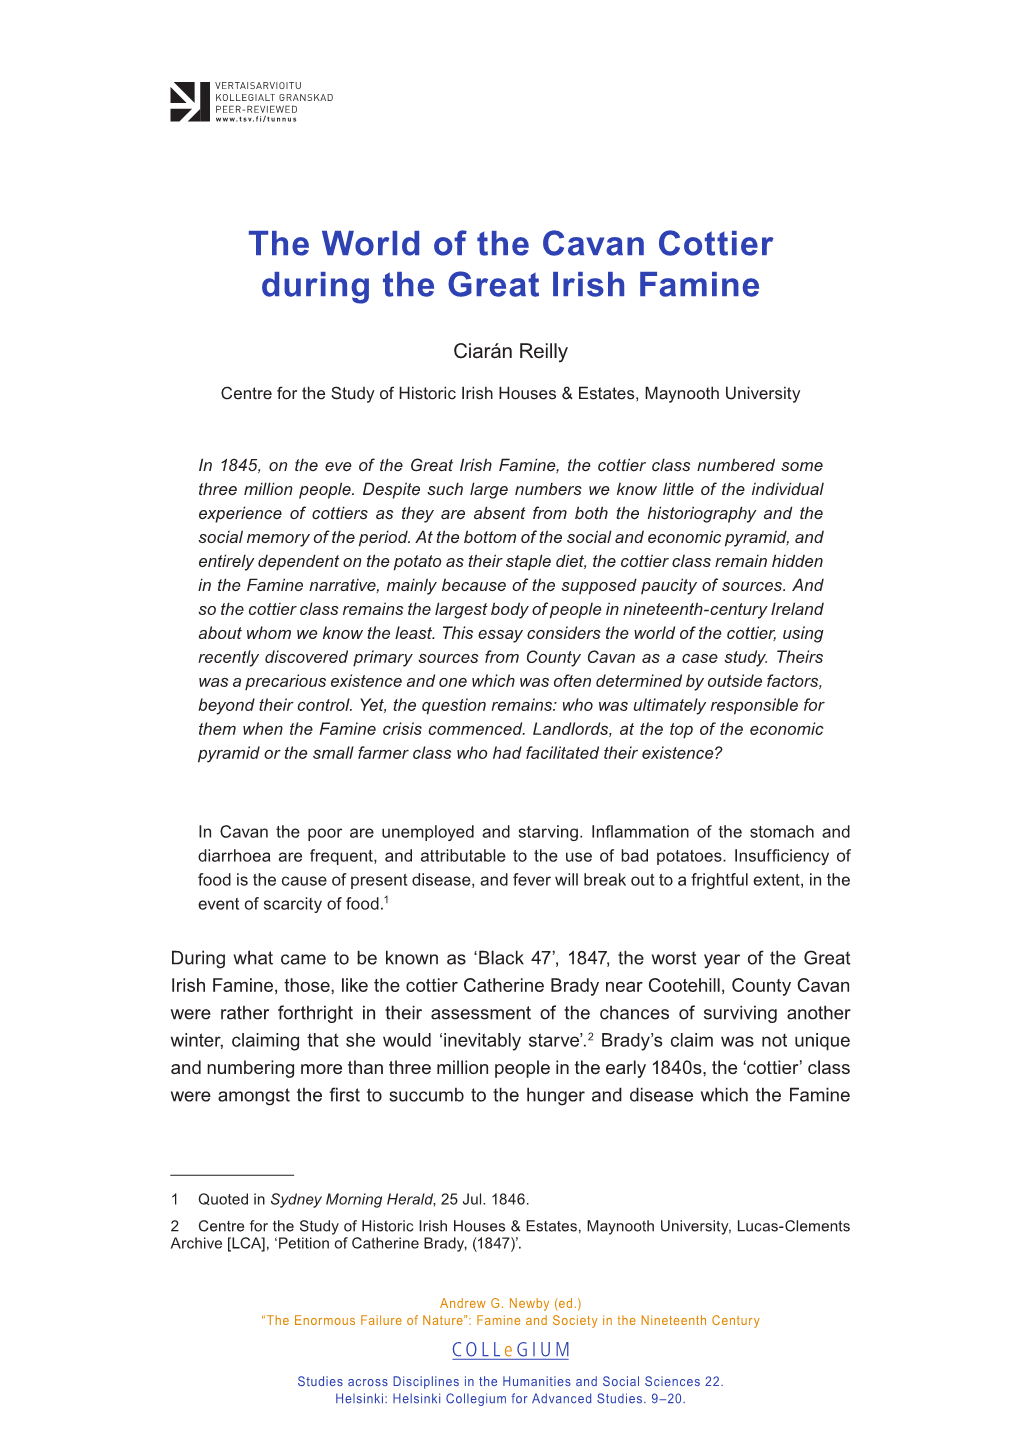 The World of the Cavan Cottier During the Great Irish Famine